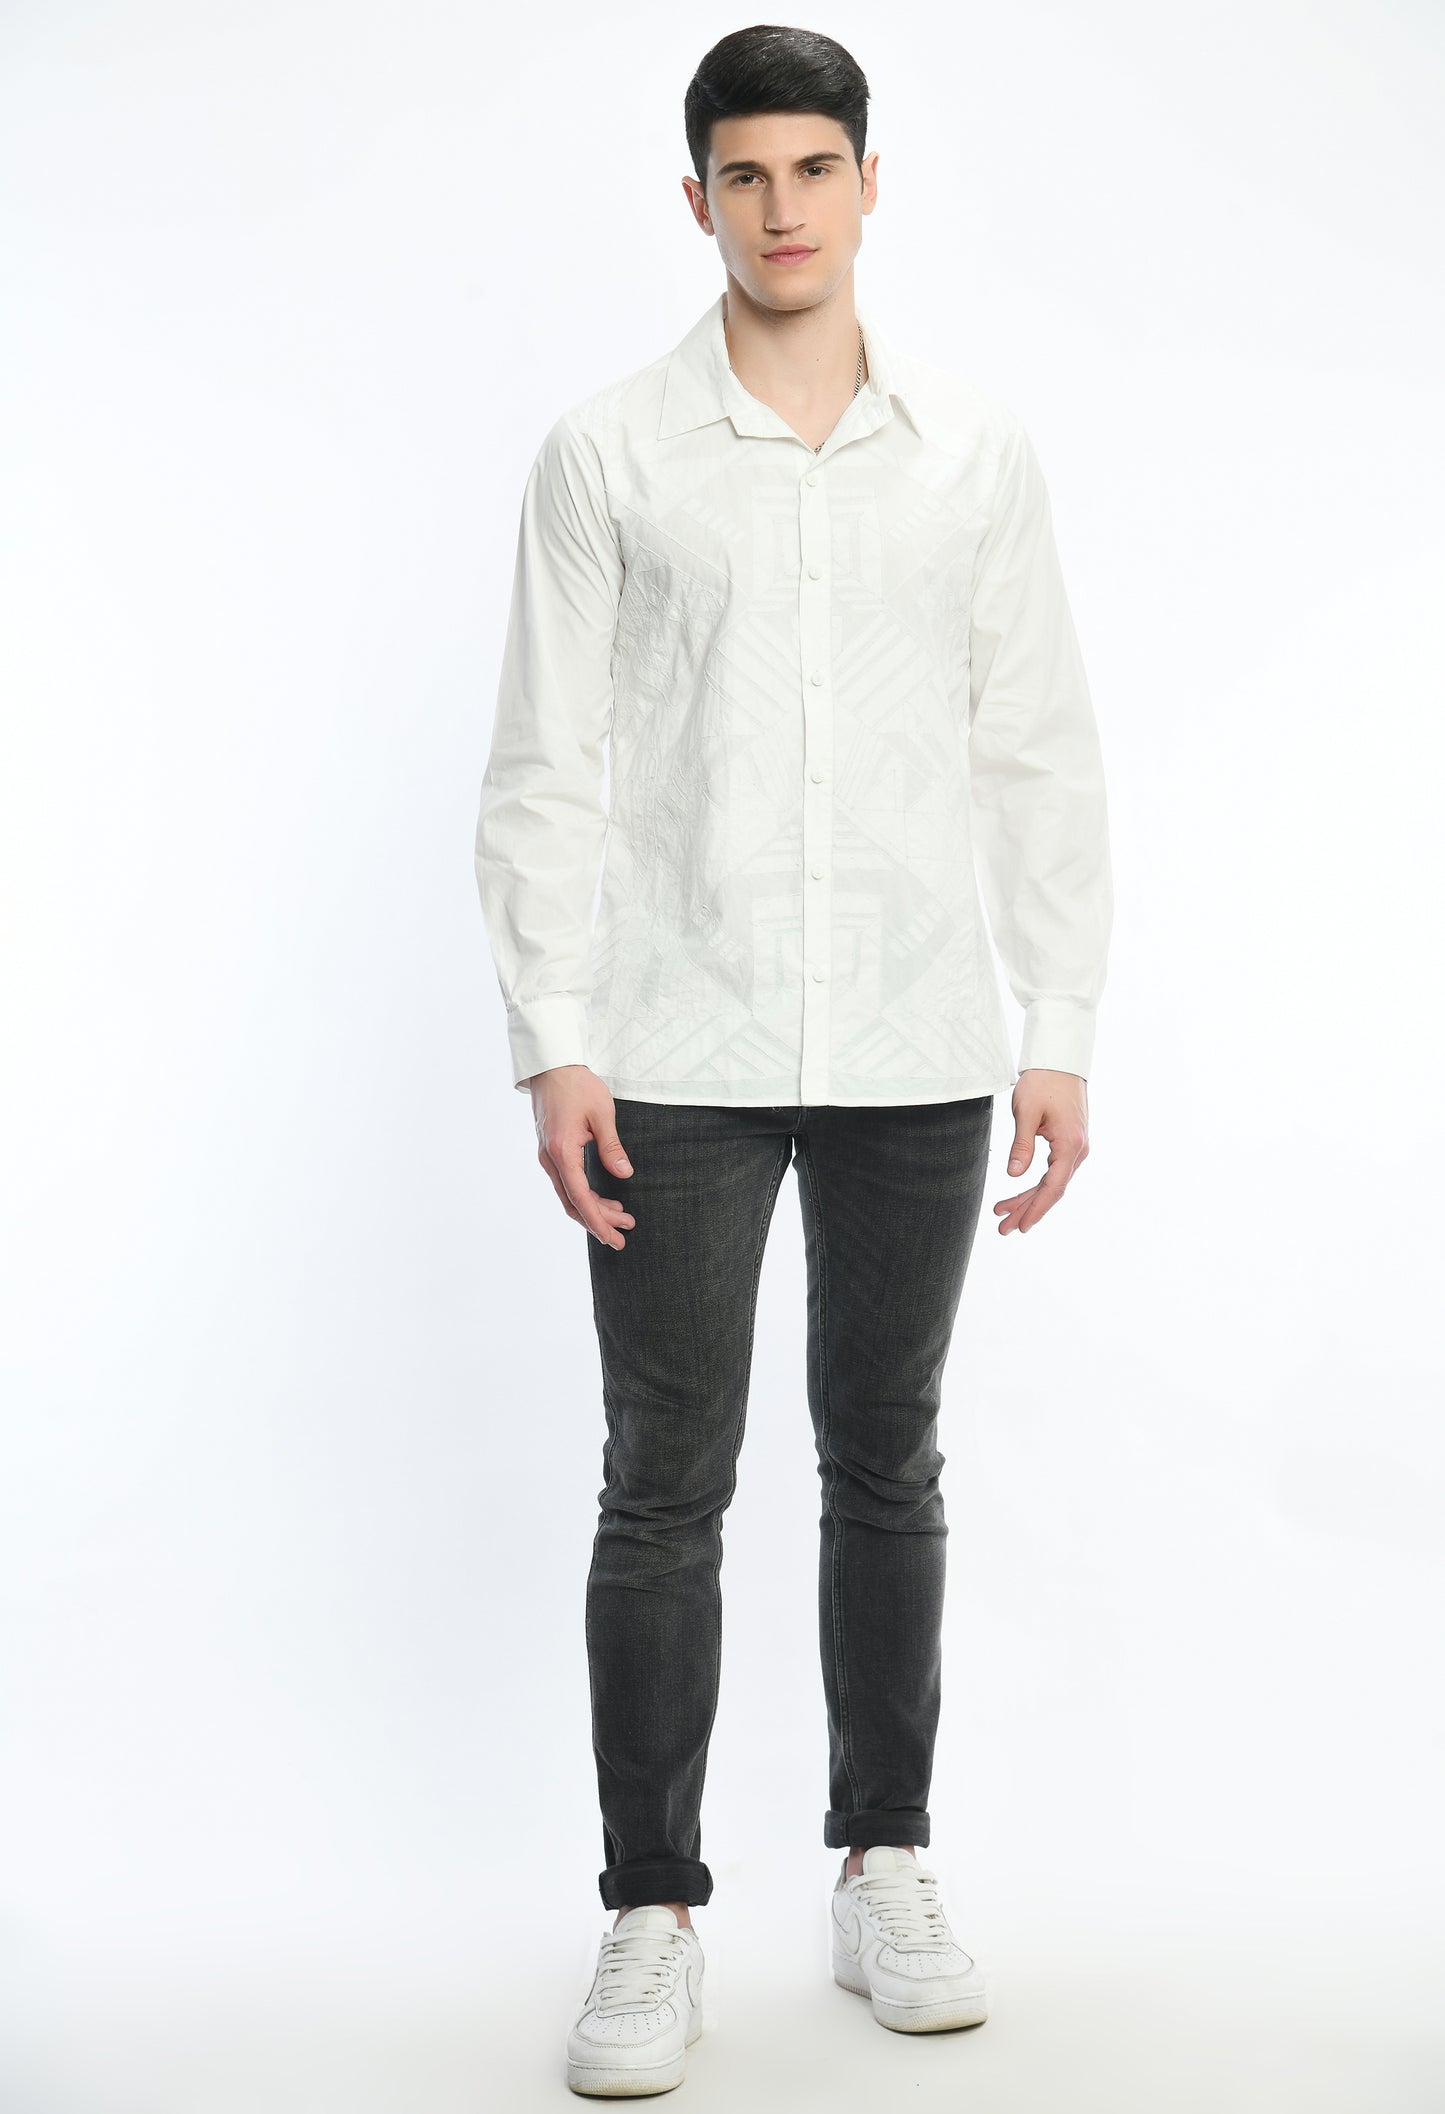 A White cotton shirt showcasing tone on tone appliqué work